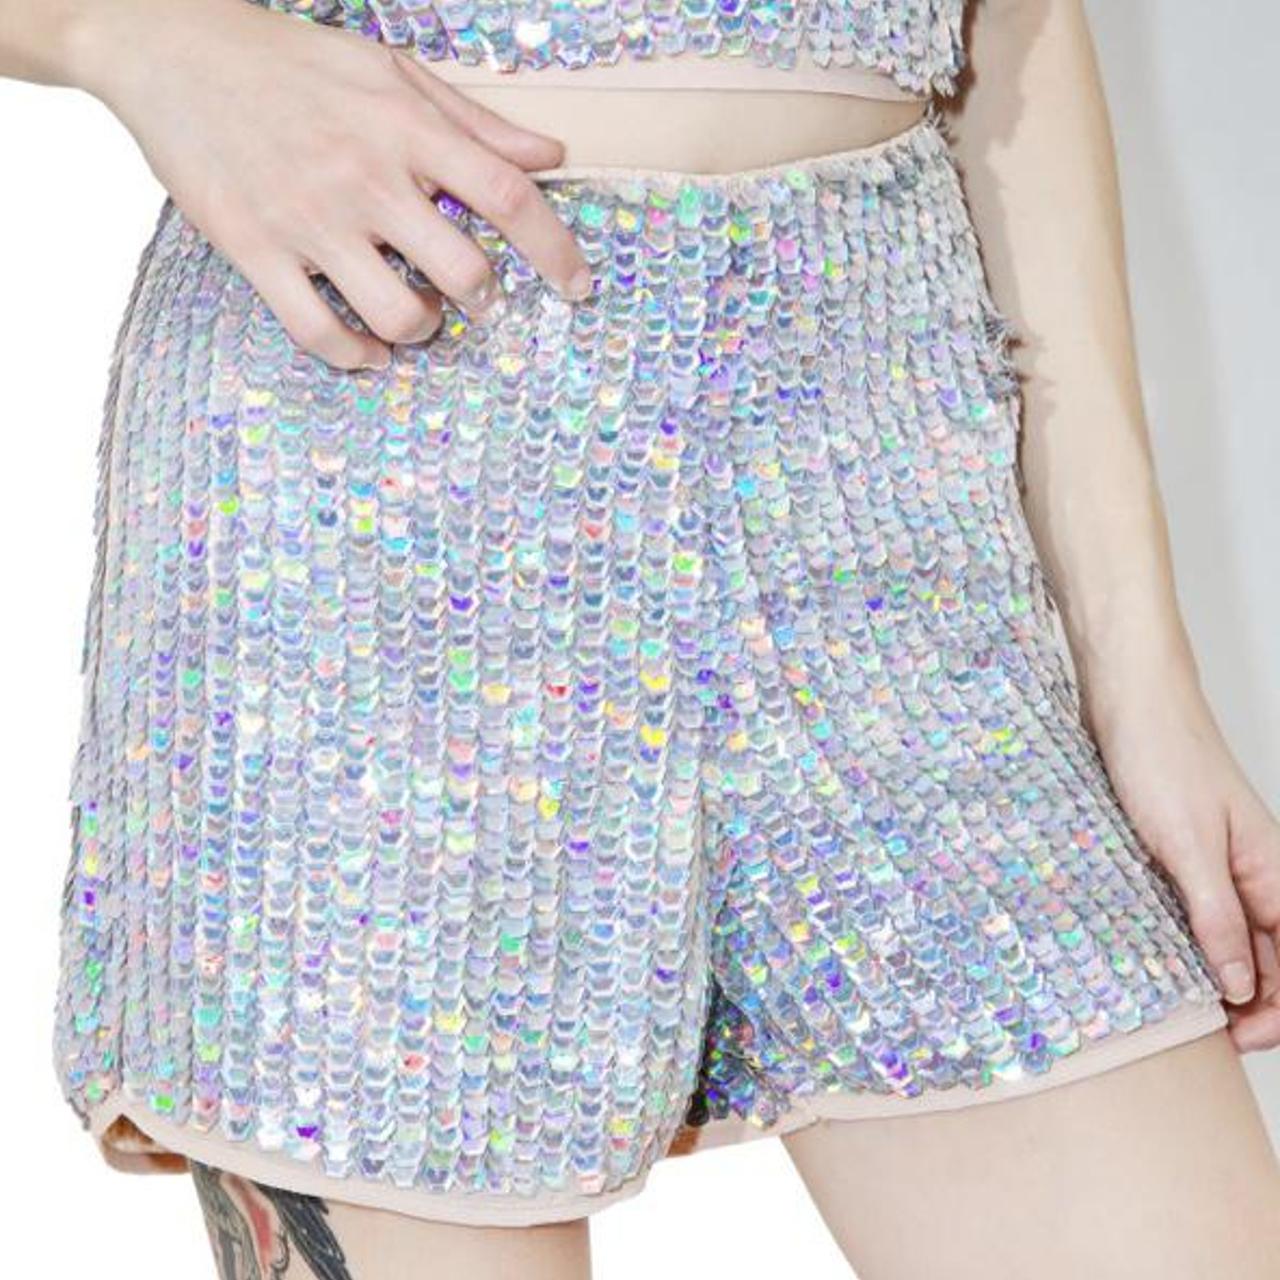 Product Image 1 - Glamorous disco iridescent sequin shorts

Brand